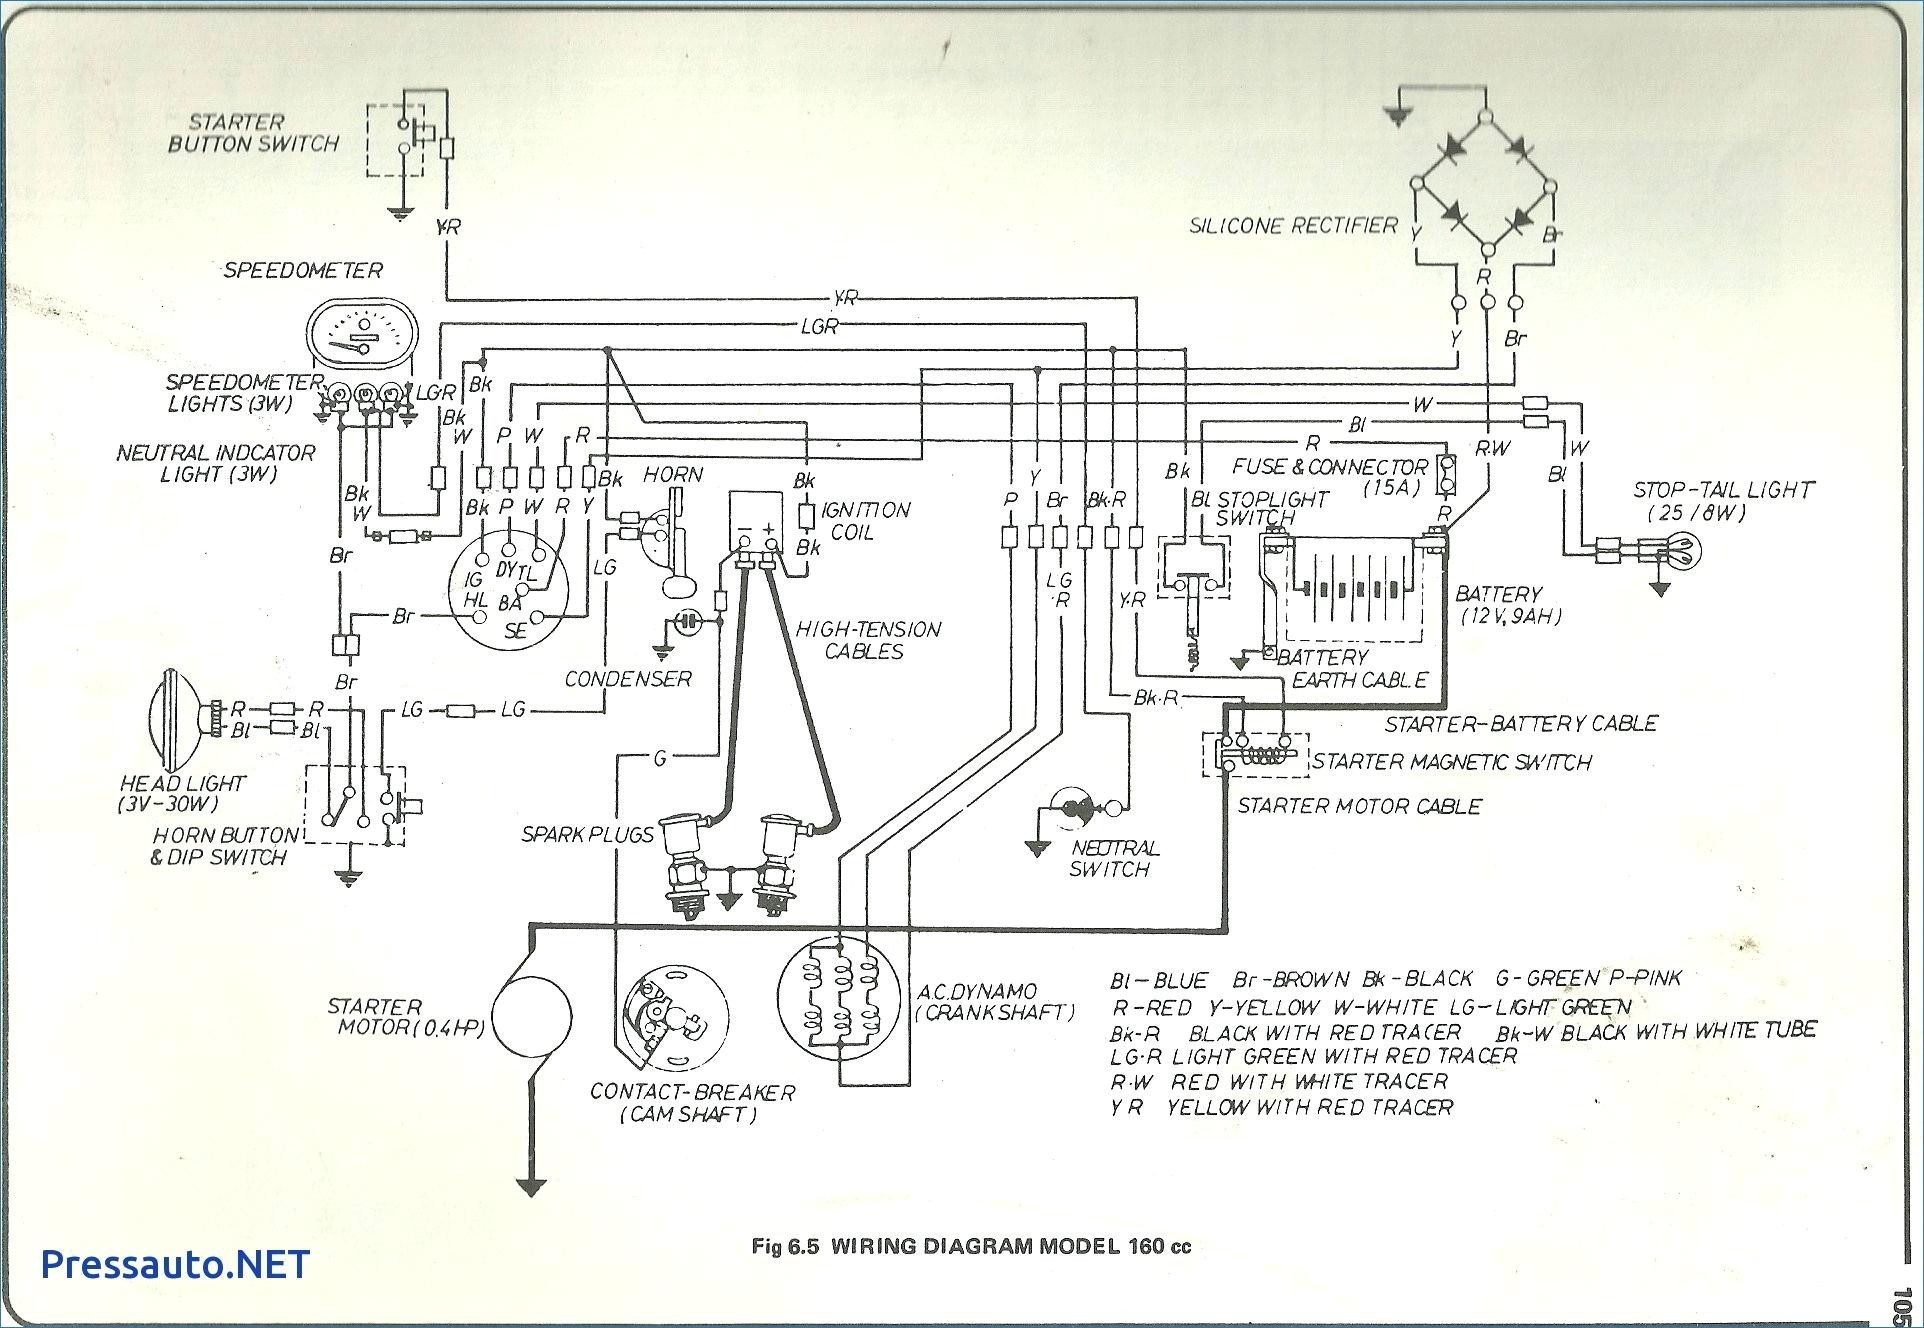 Dryer Wiring Diagram Book Kenmore Dryer Wiring Diagram Sample